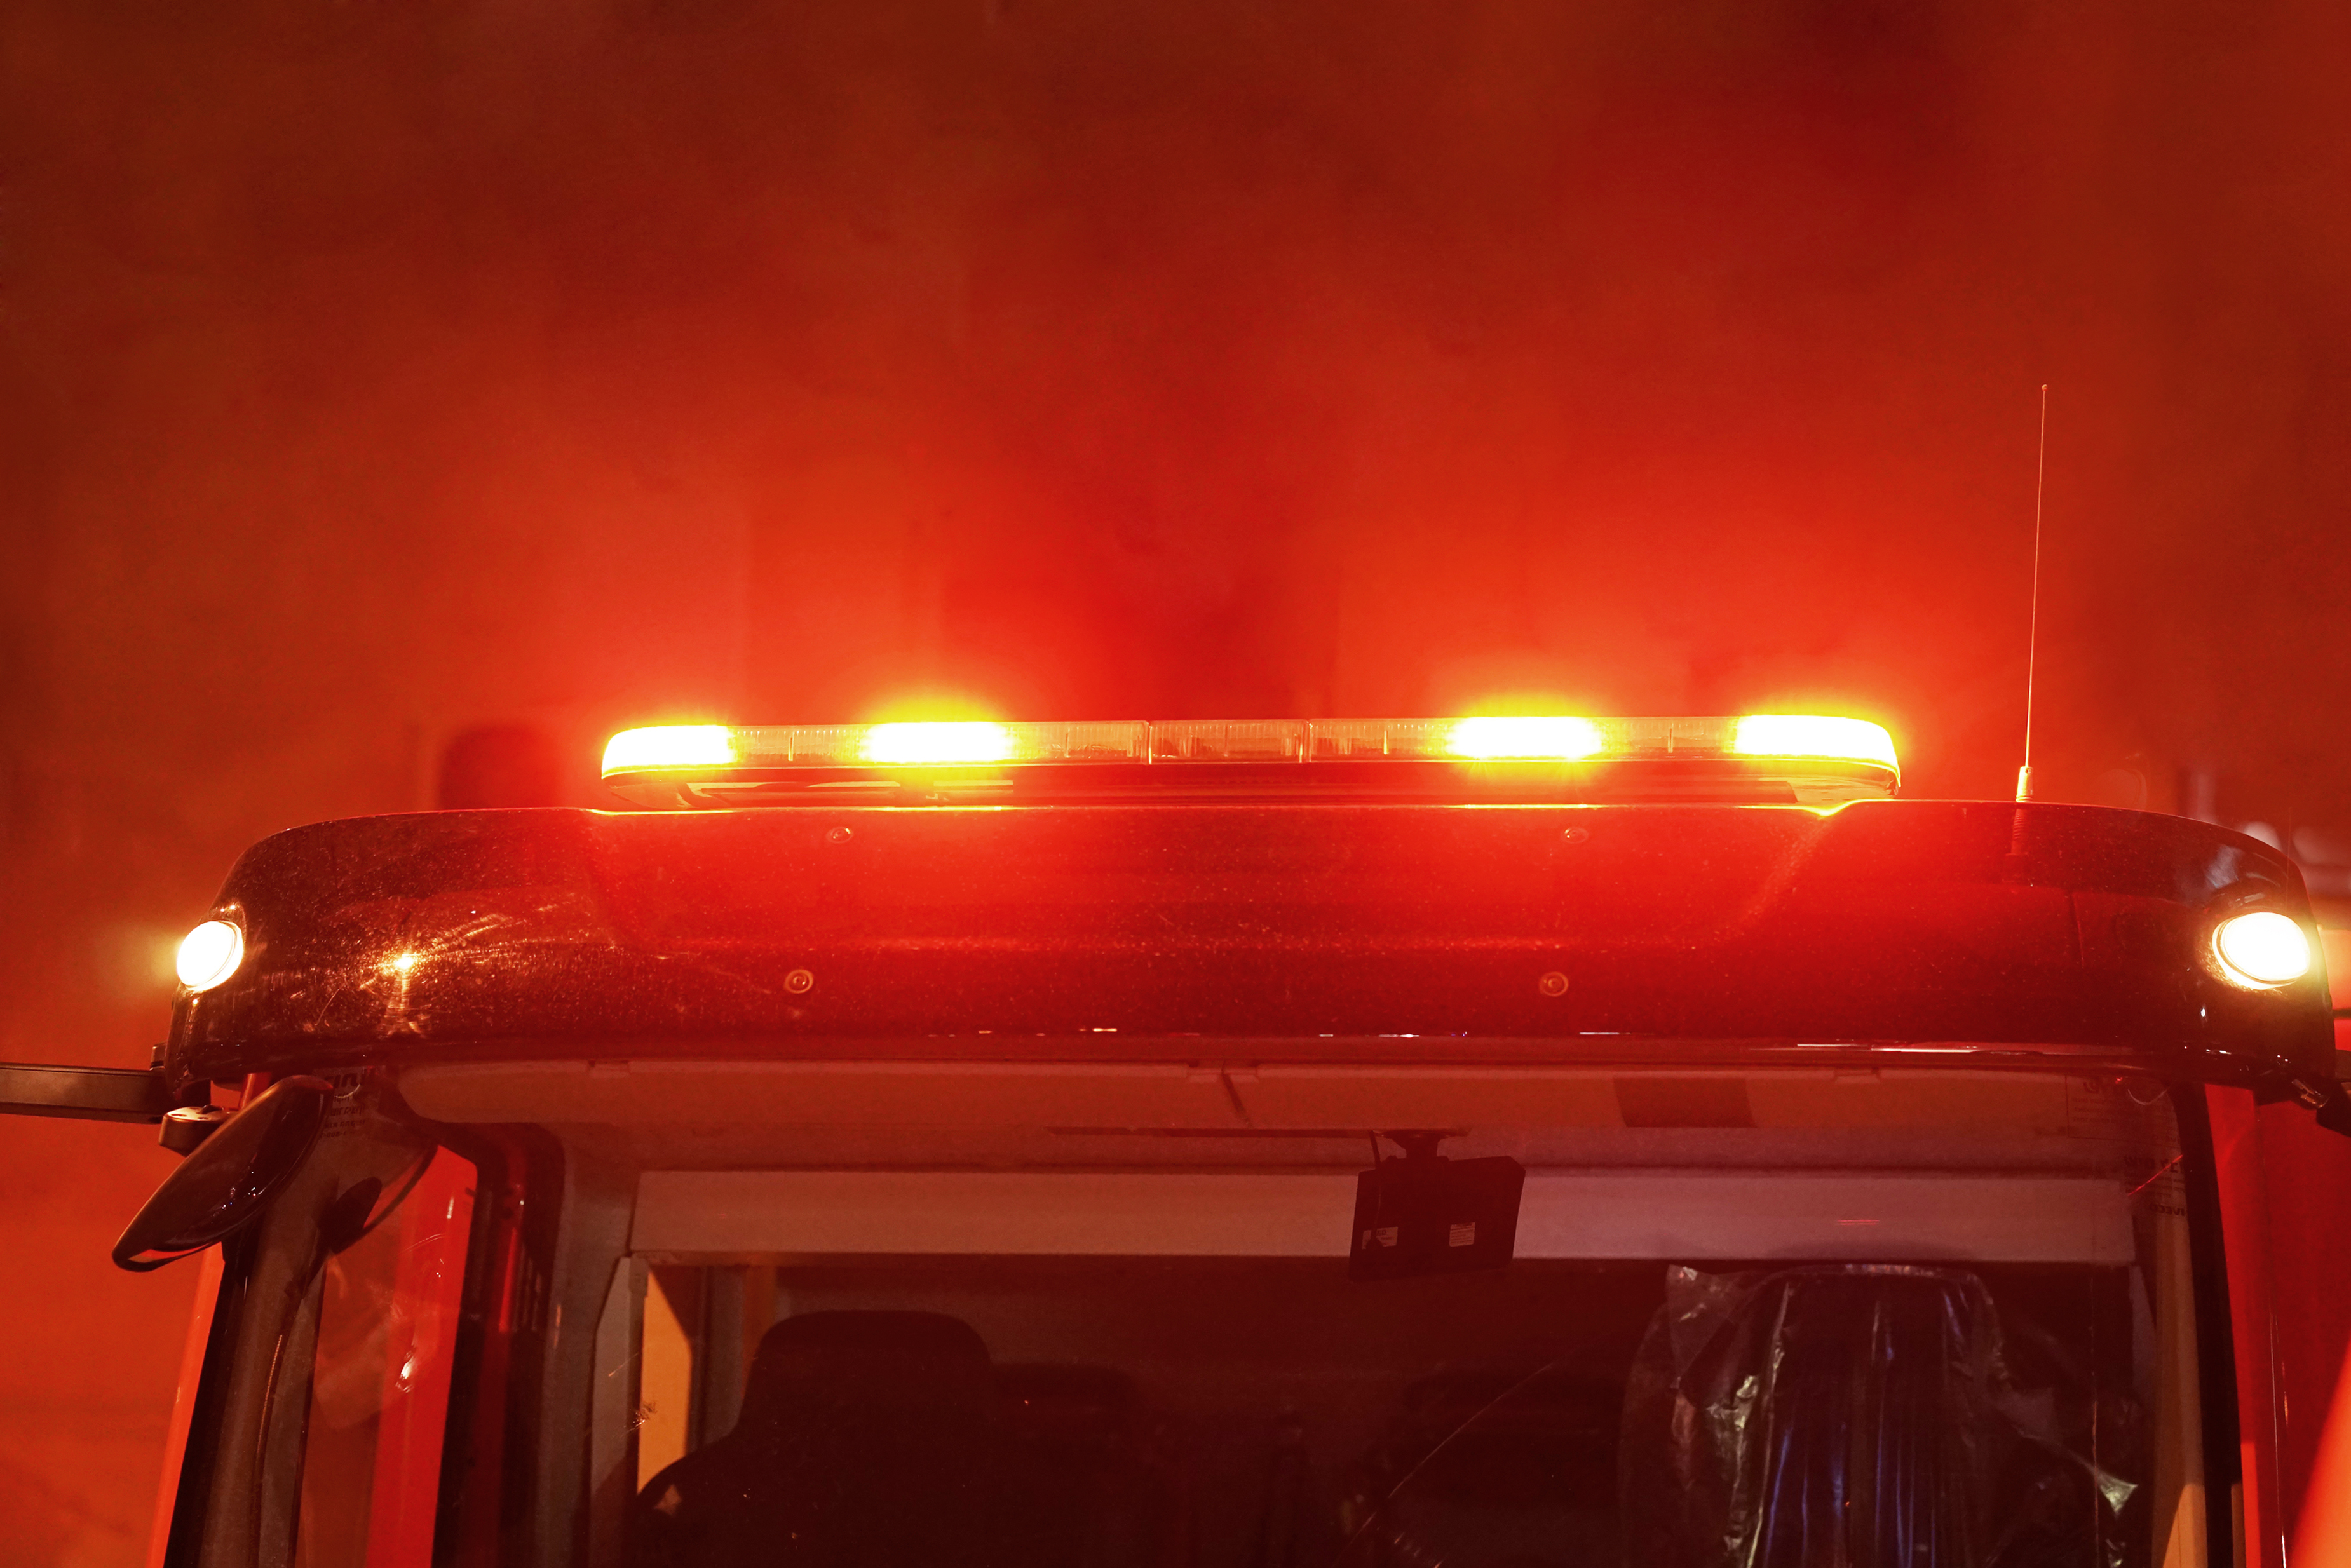 At least 14 RVs damaged in fire at Santa Fe Springs car dealership